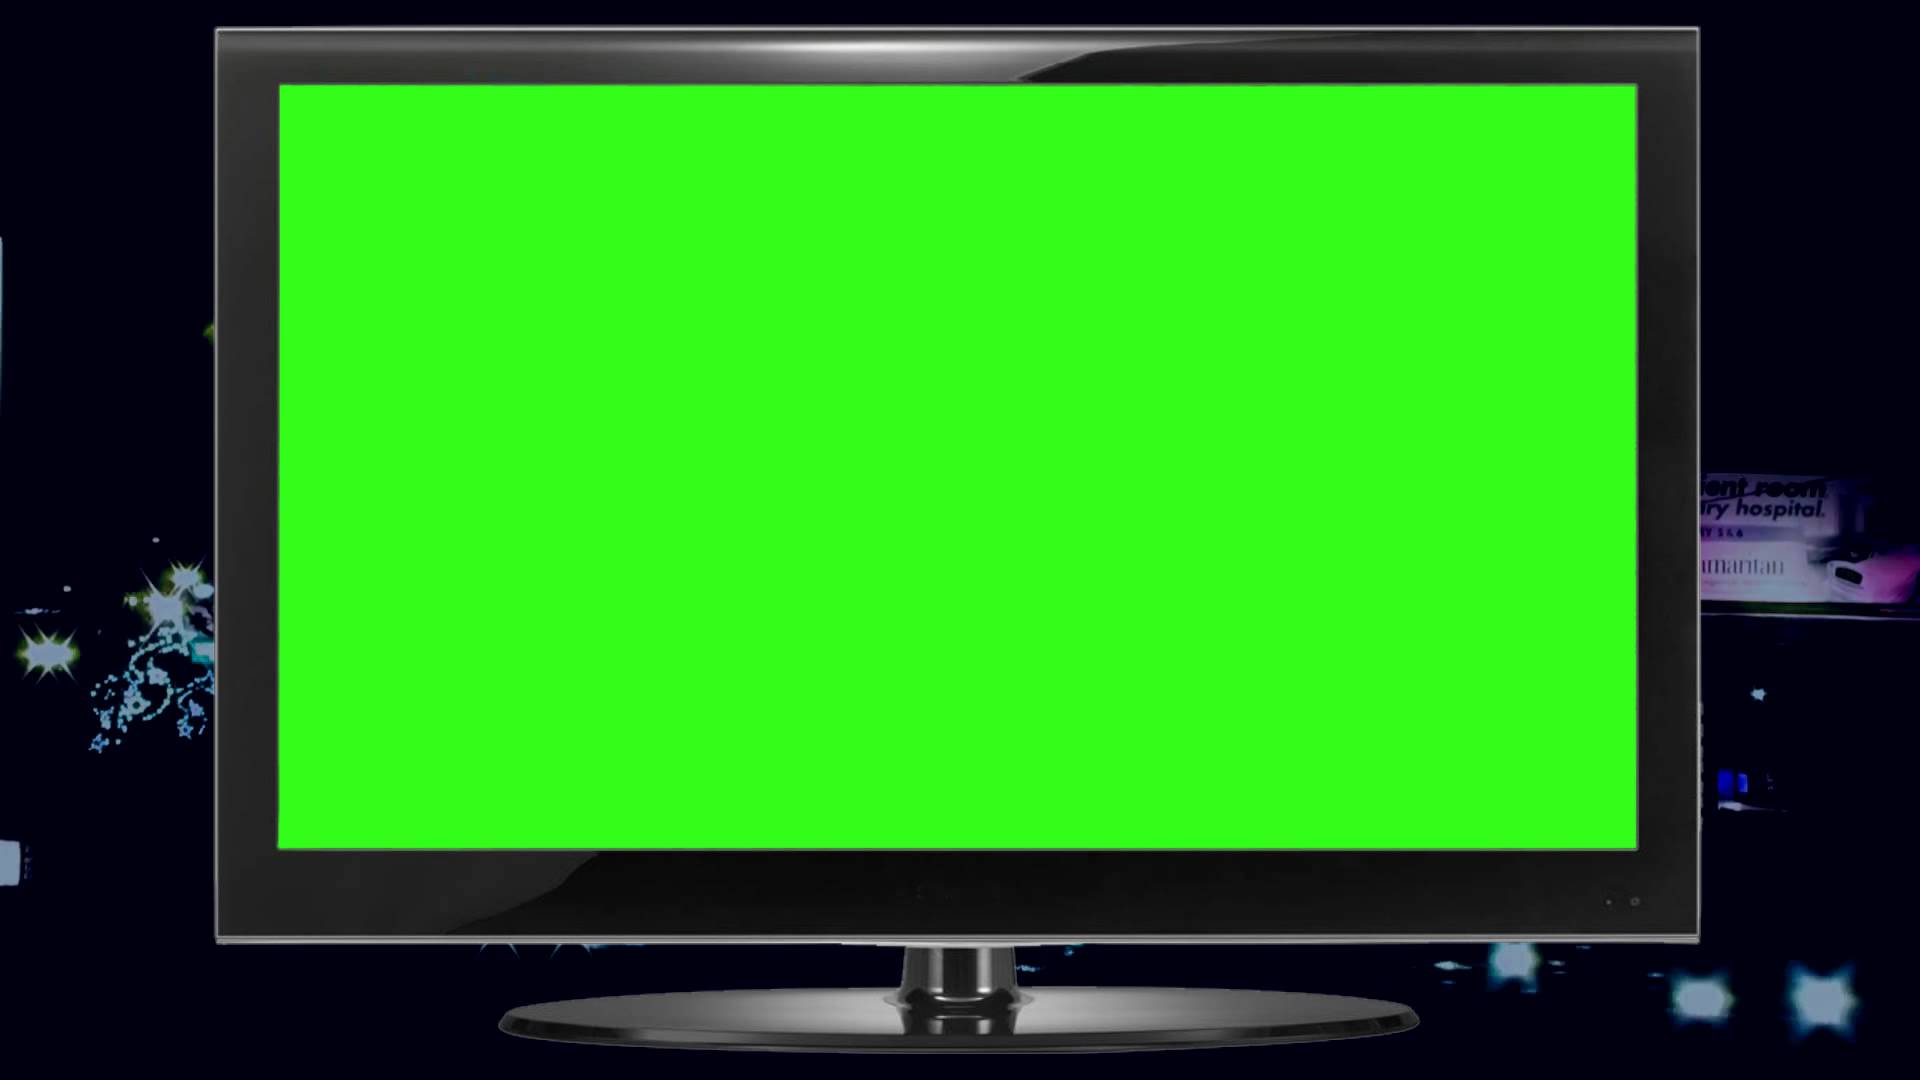 Green Screen TV - Free background video 1080p HD stock video